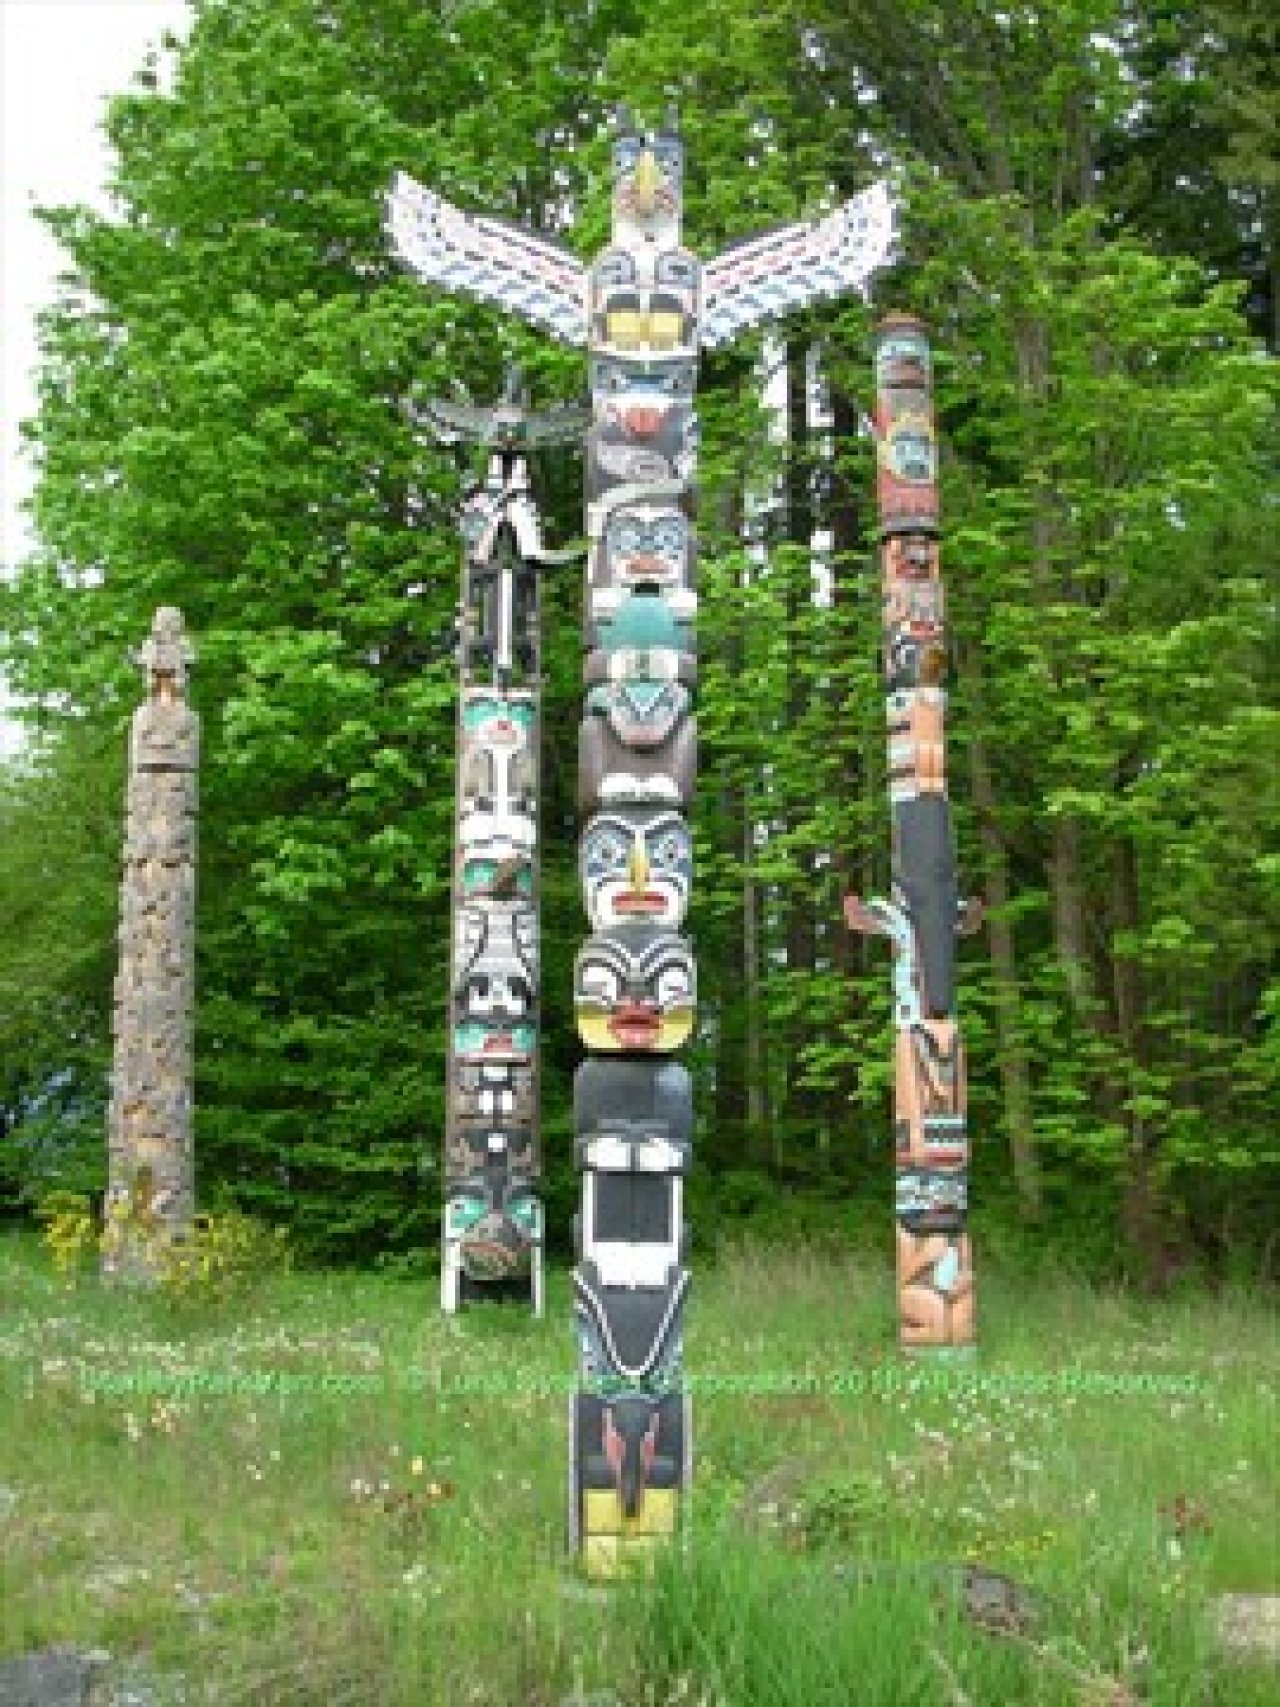 Kakaso'Las Totem Pole
Source: http://stanleyparkvan.com/stanley-park-van-attractions-totem-poles.html